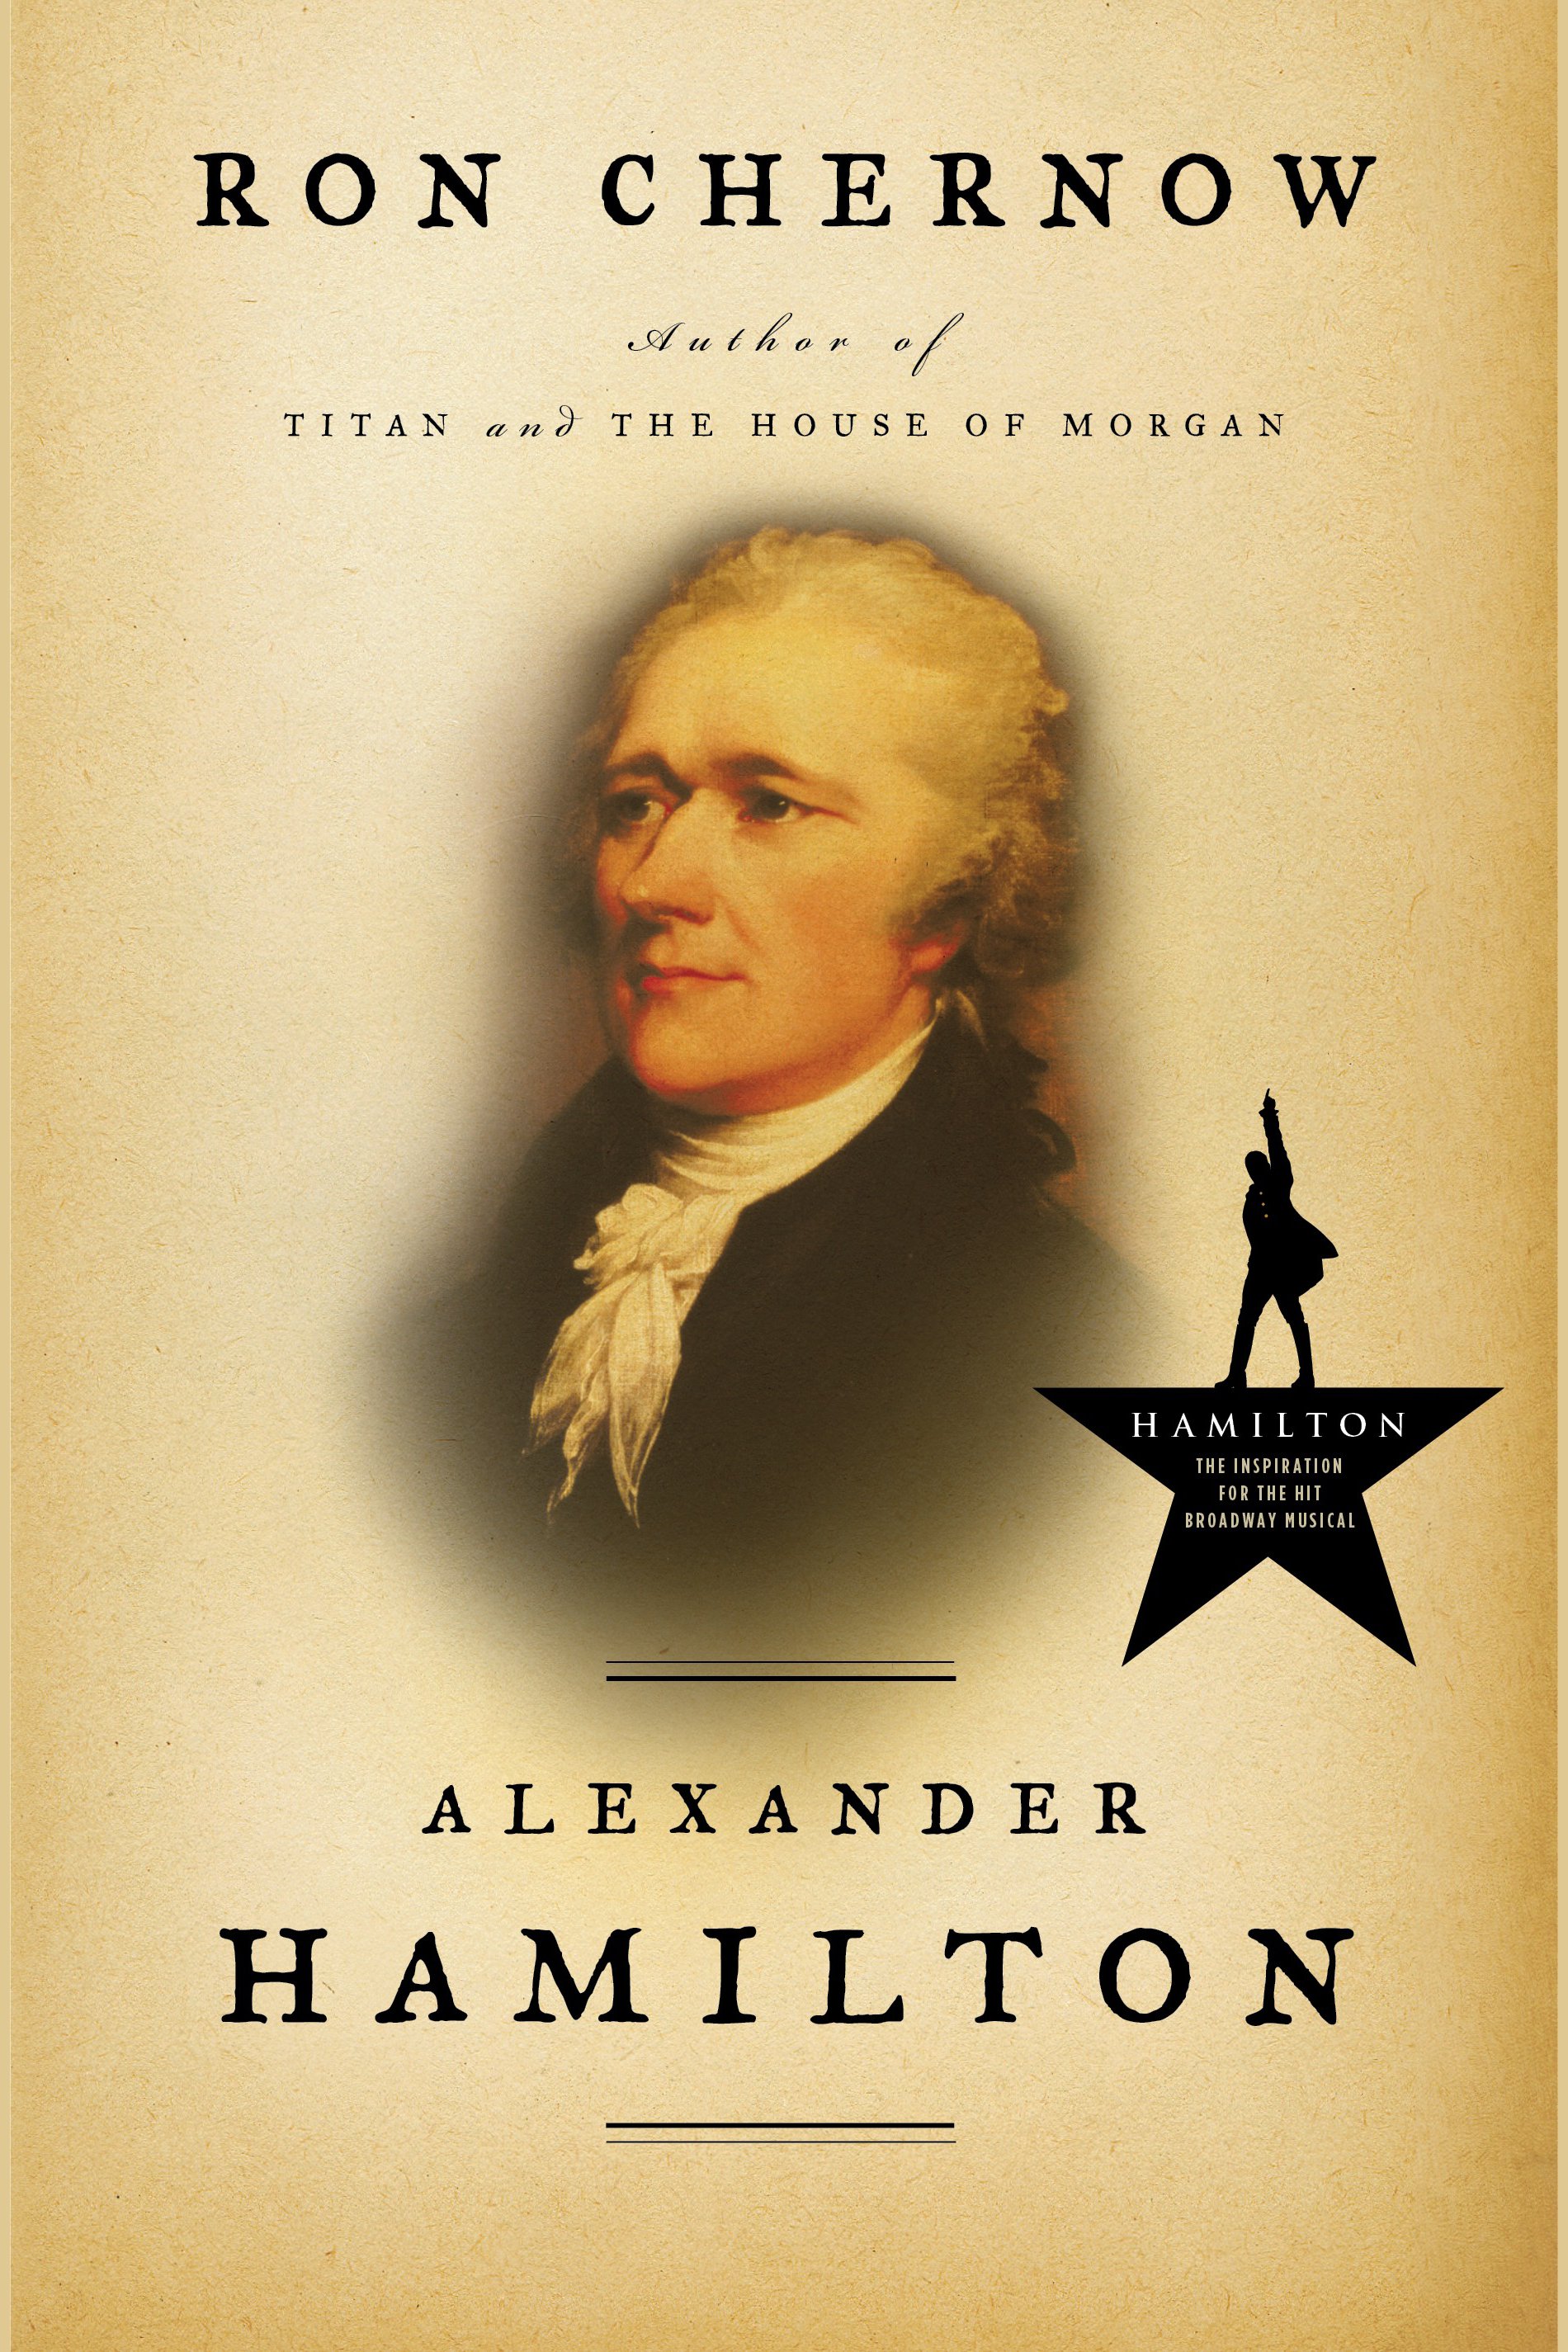 Alexander Hamilton cover image